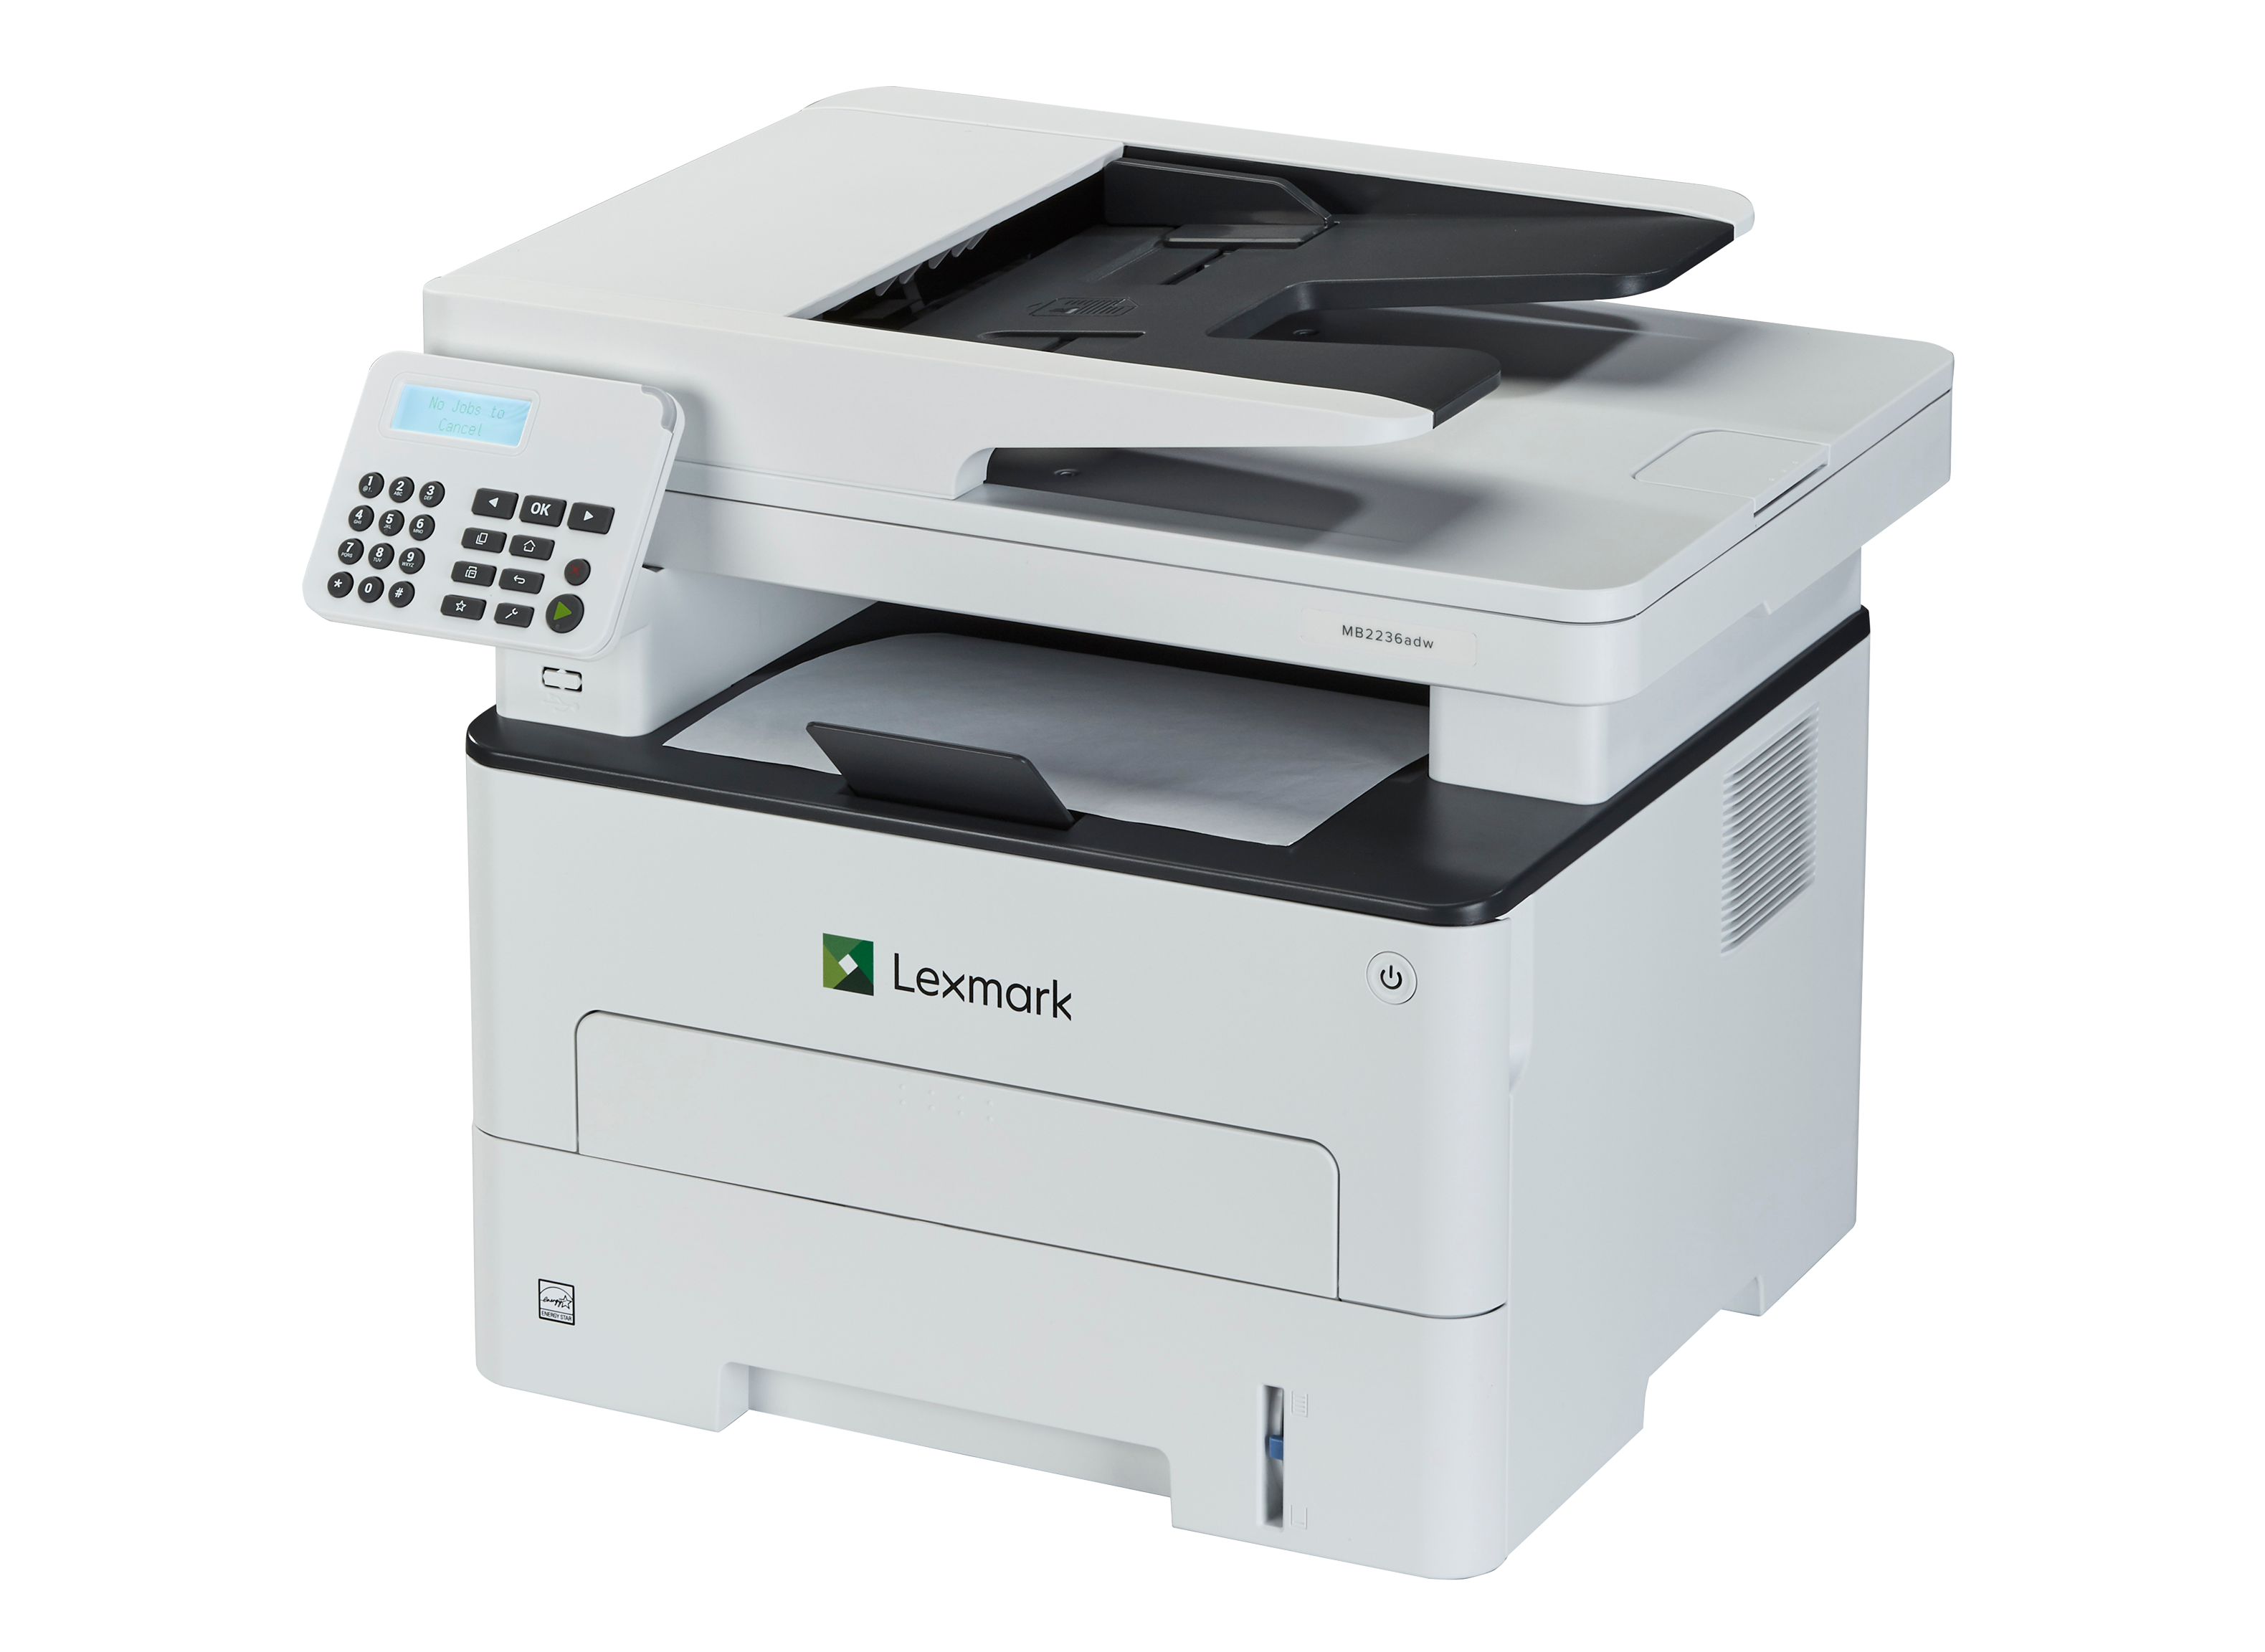 Lexmark Printer - Consumer